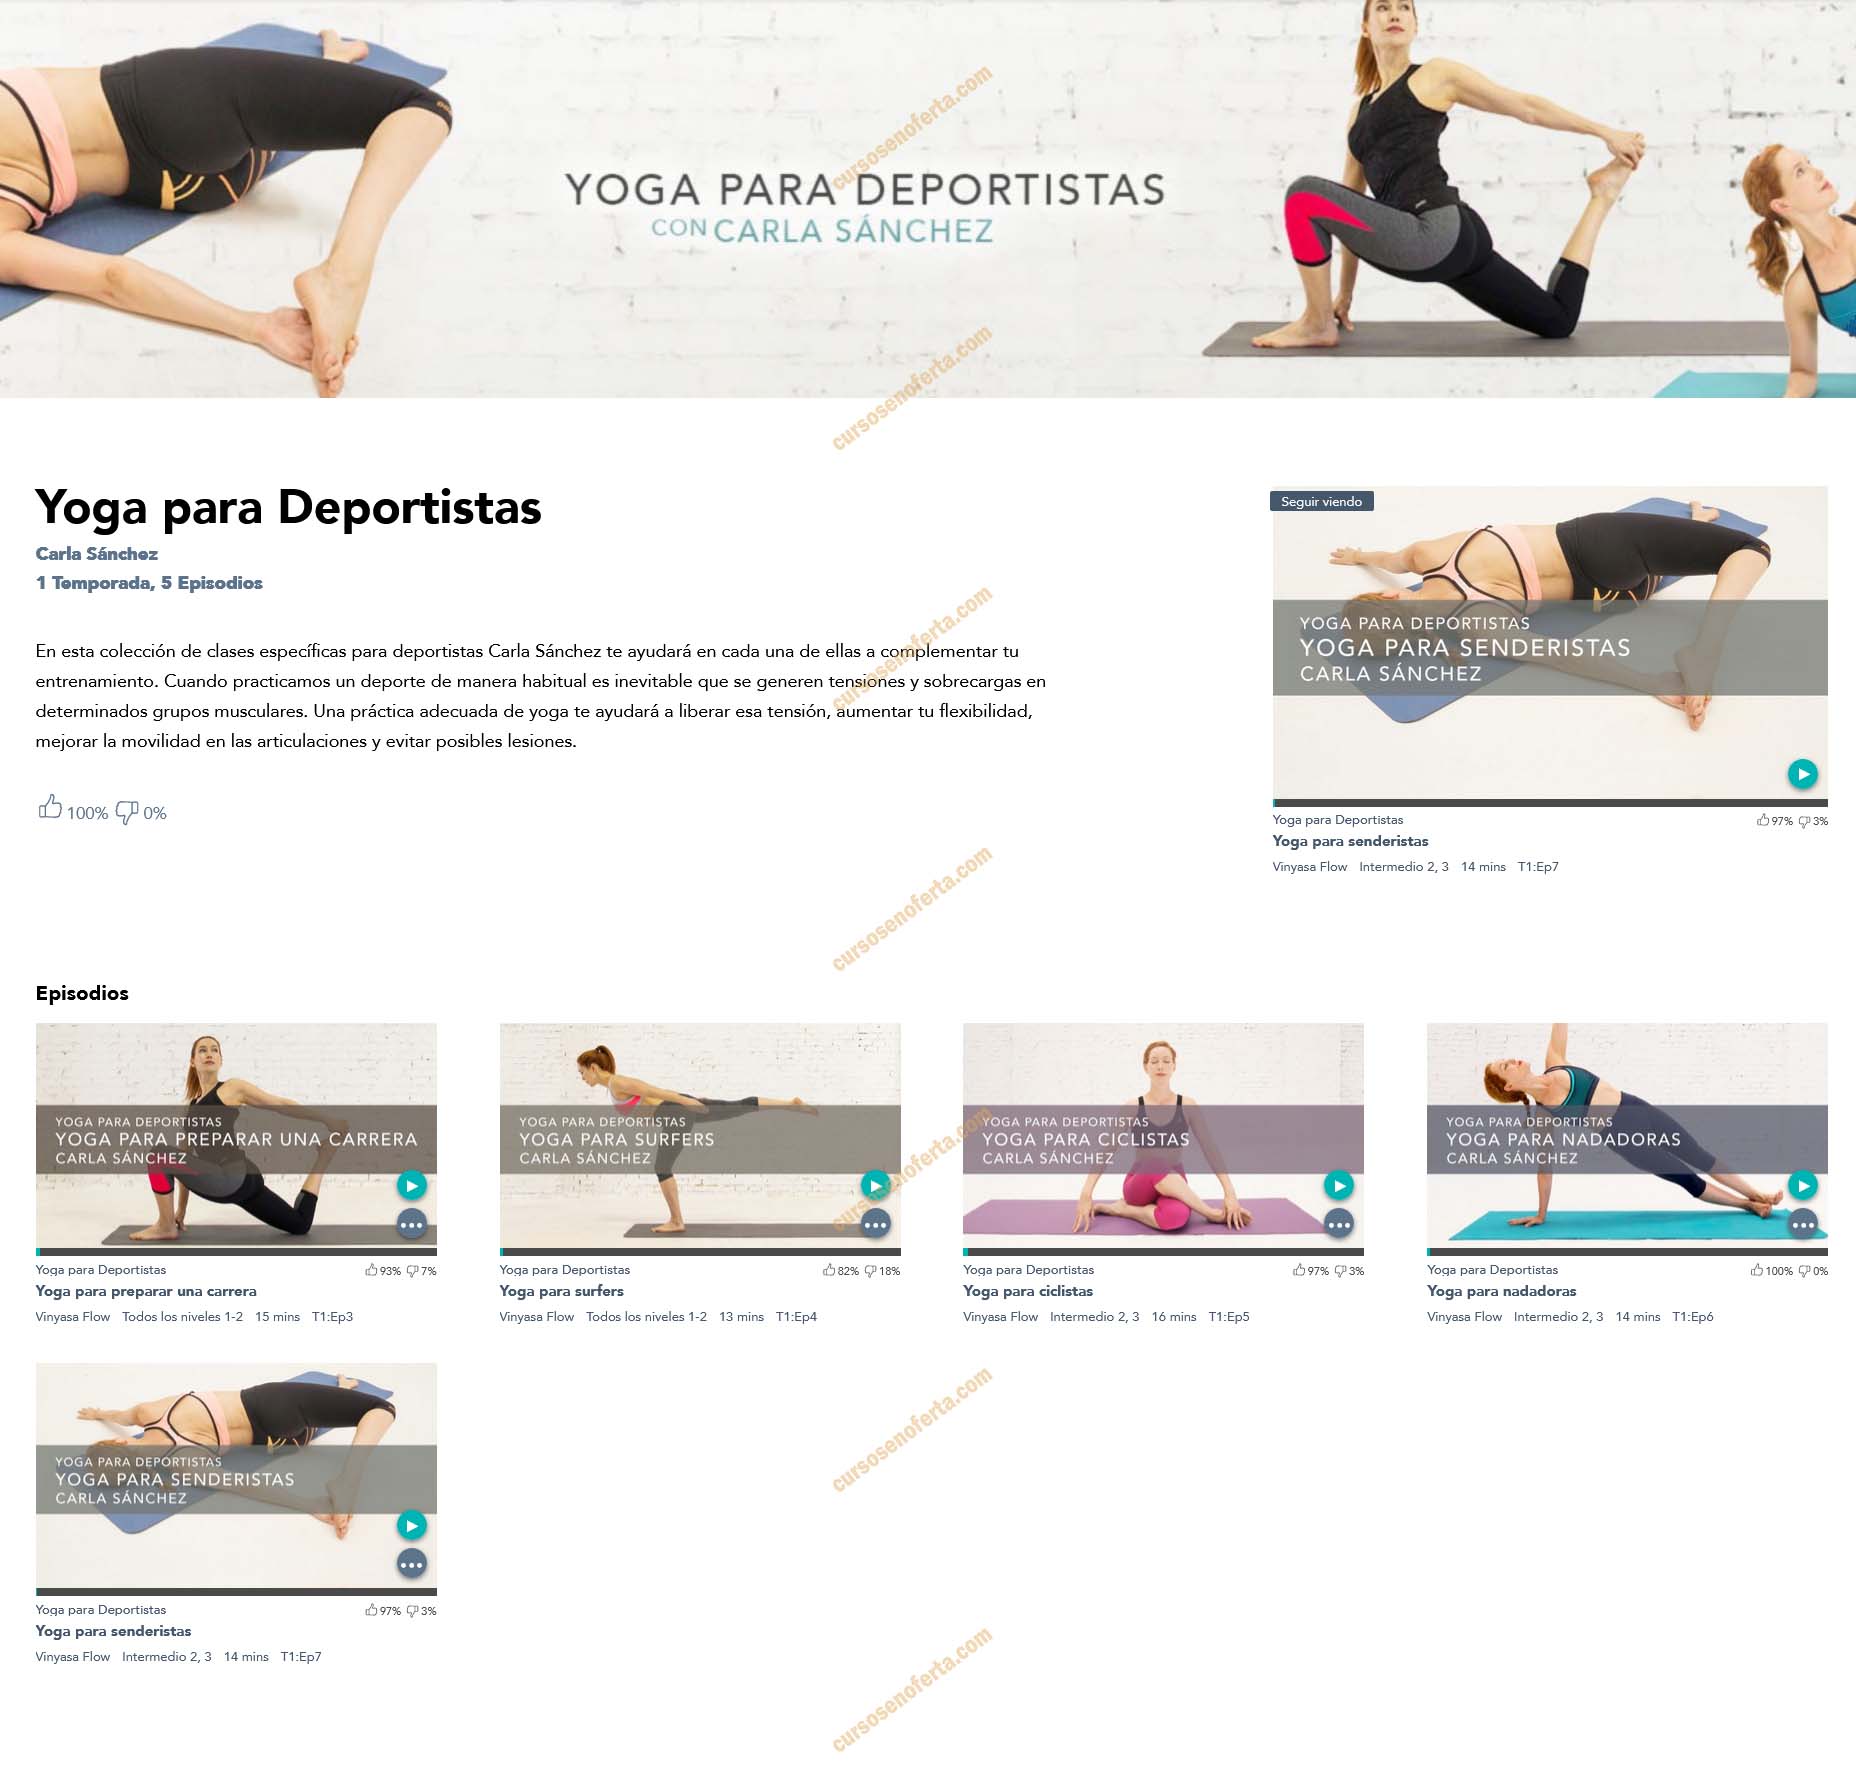 Yoga para deportistas (serie)